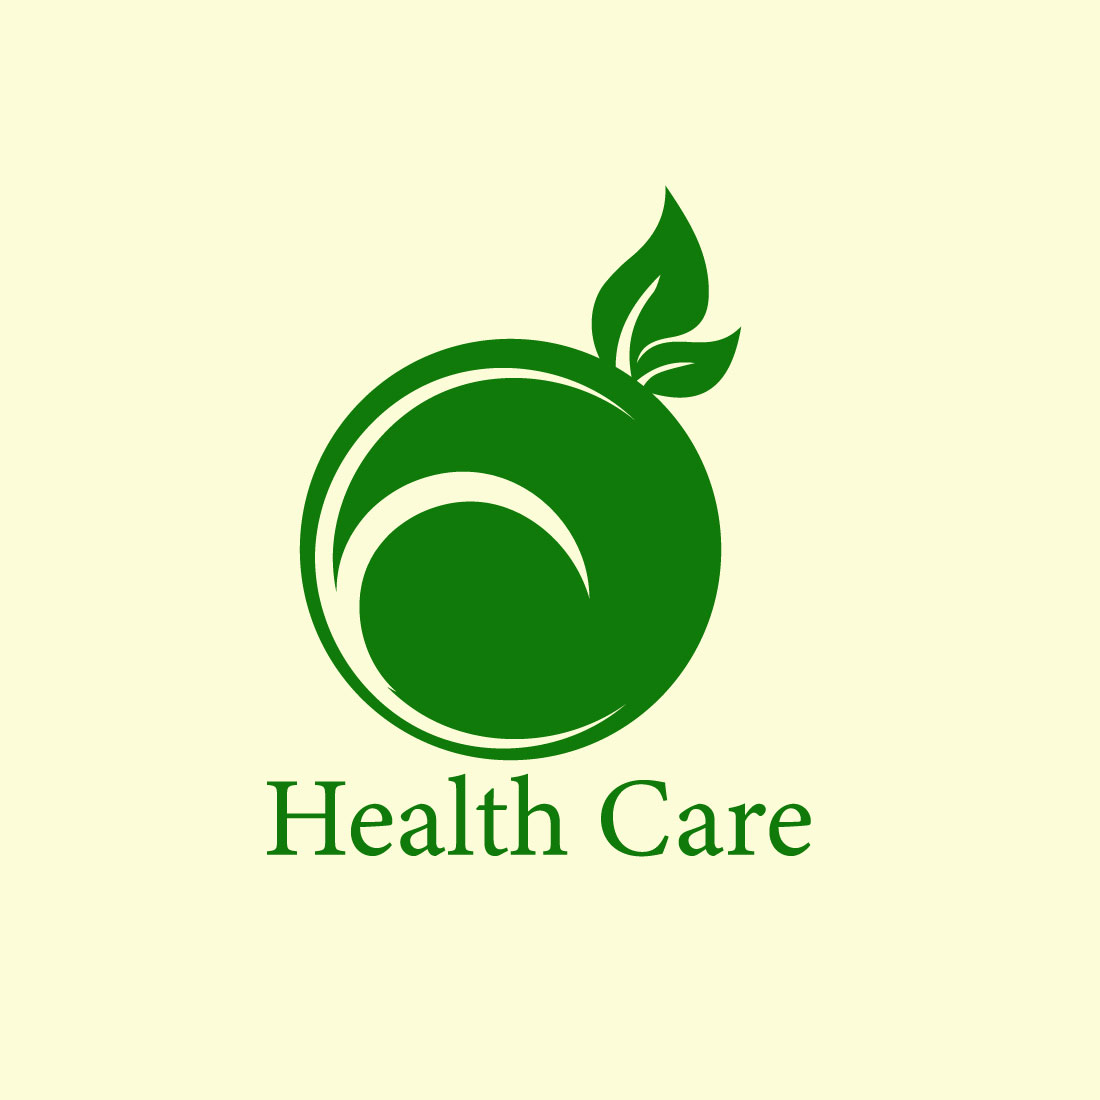 Free Soul Health Logo preview image.